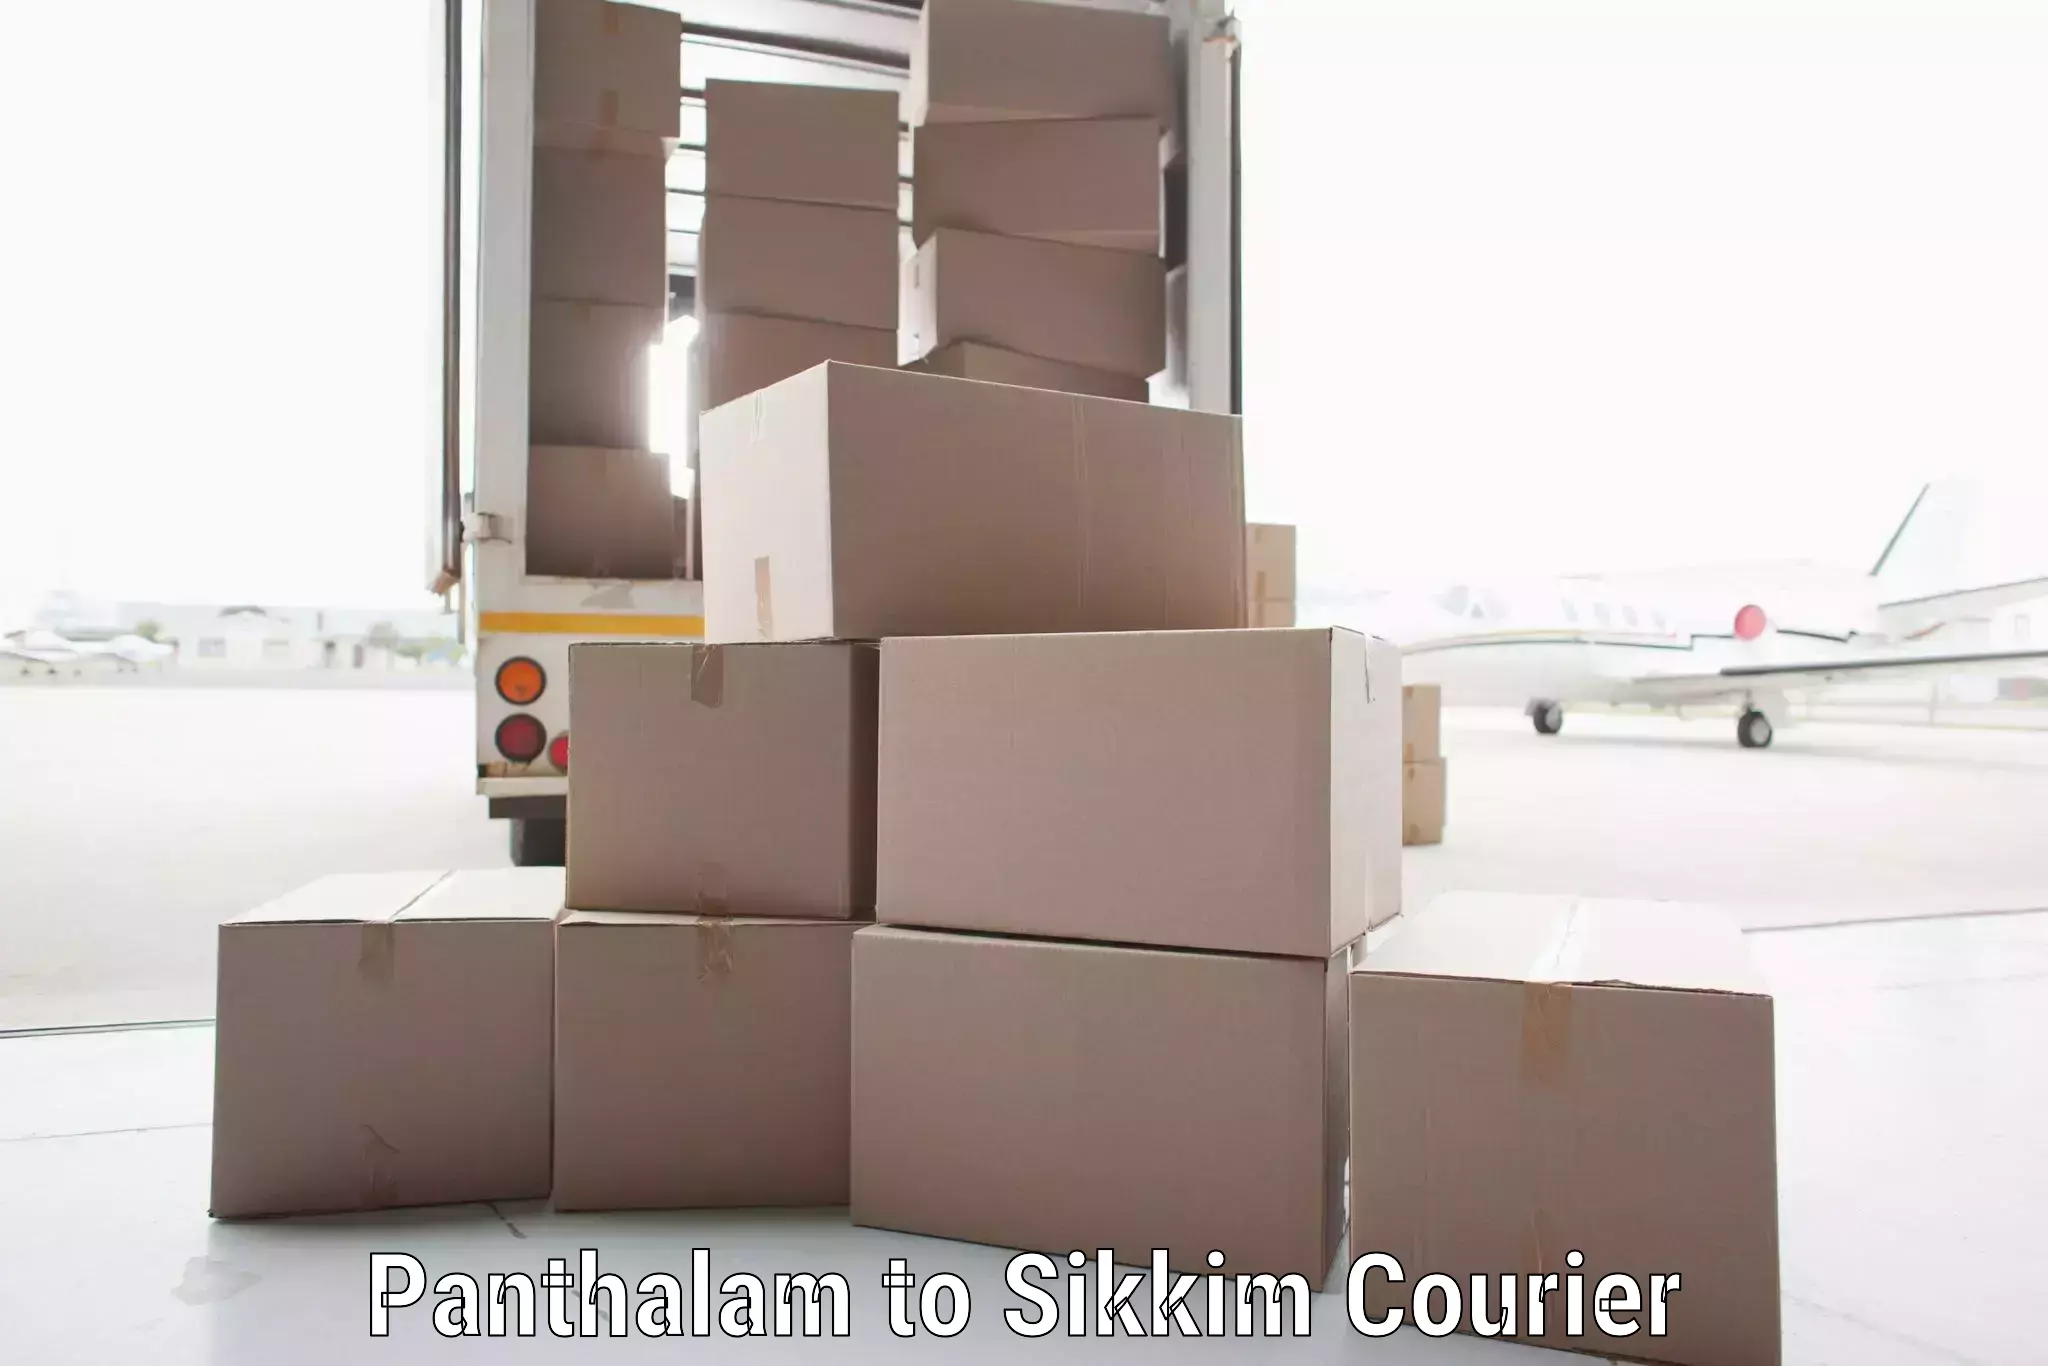 High-efficiency logistics Panthalam to Pelling